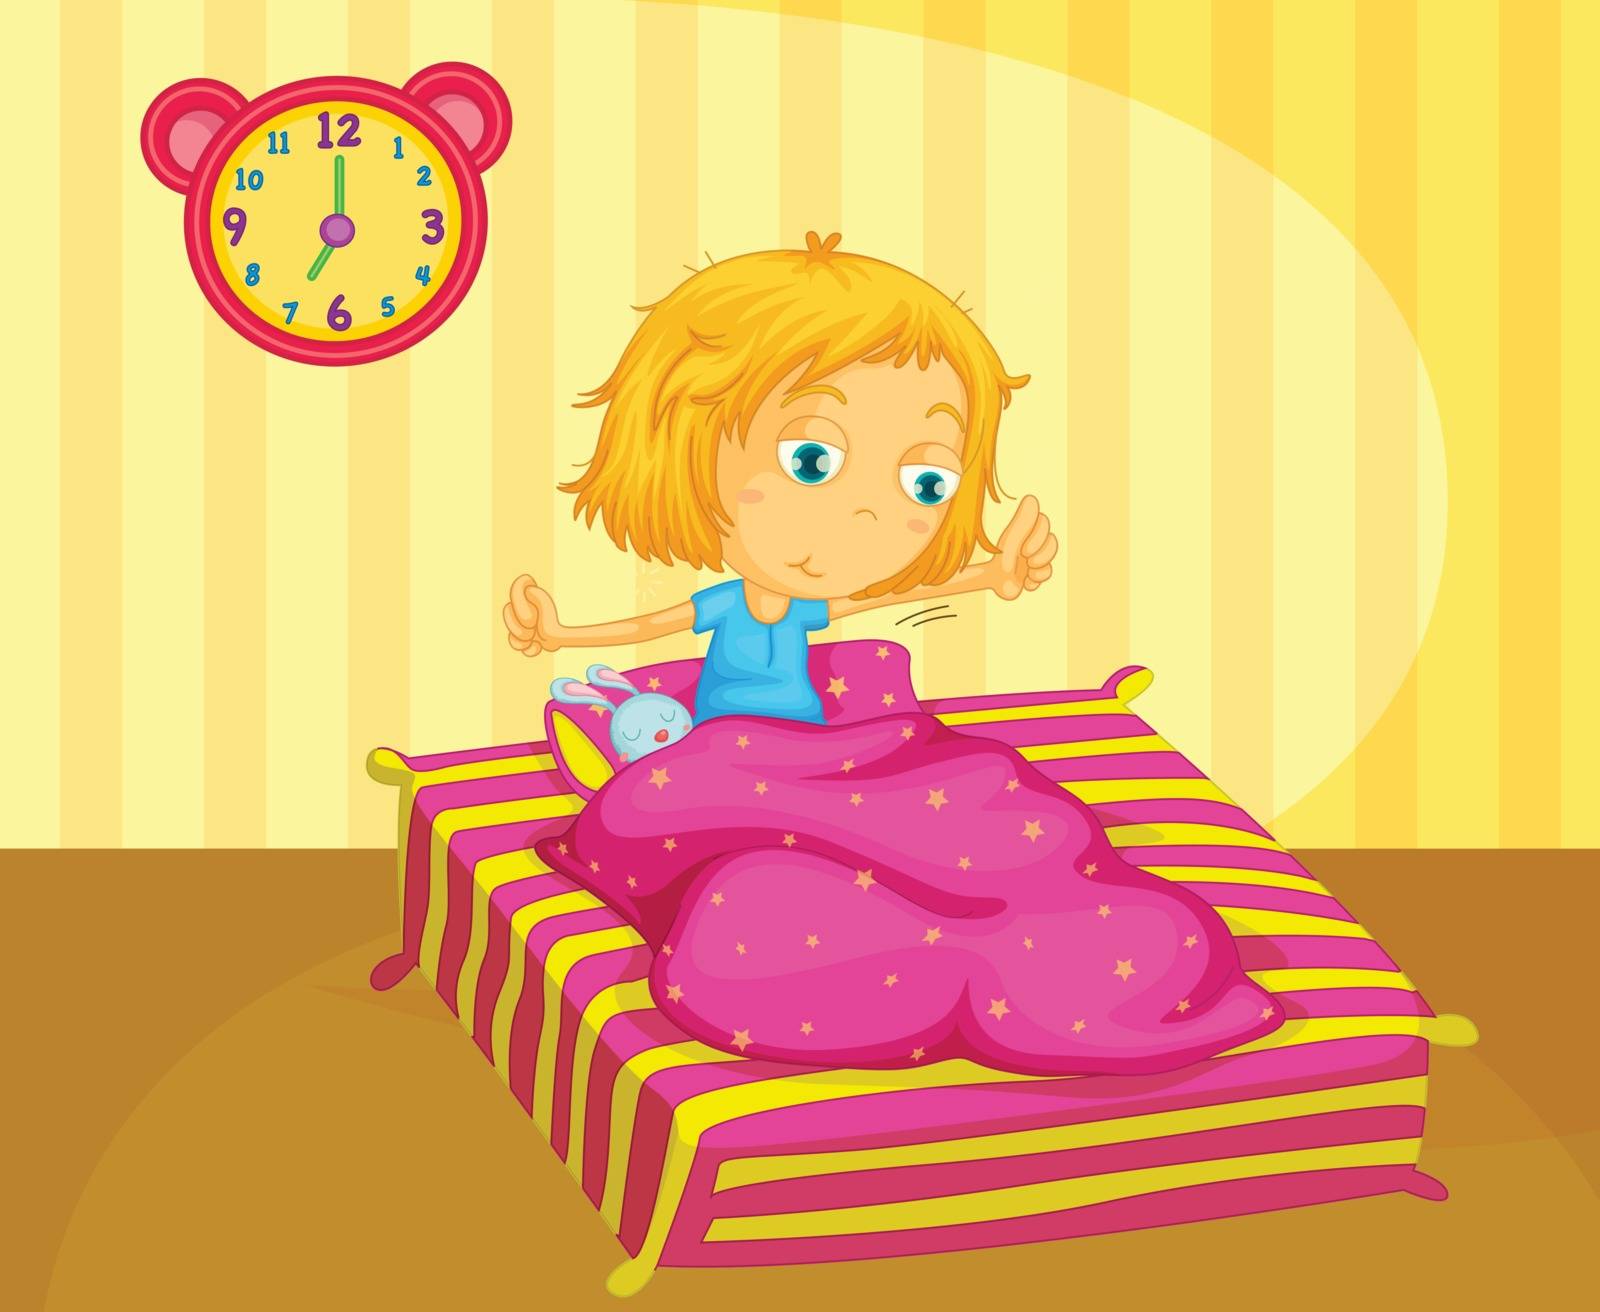 Illustration of cute girl waking